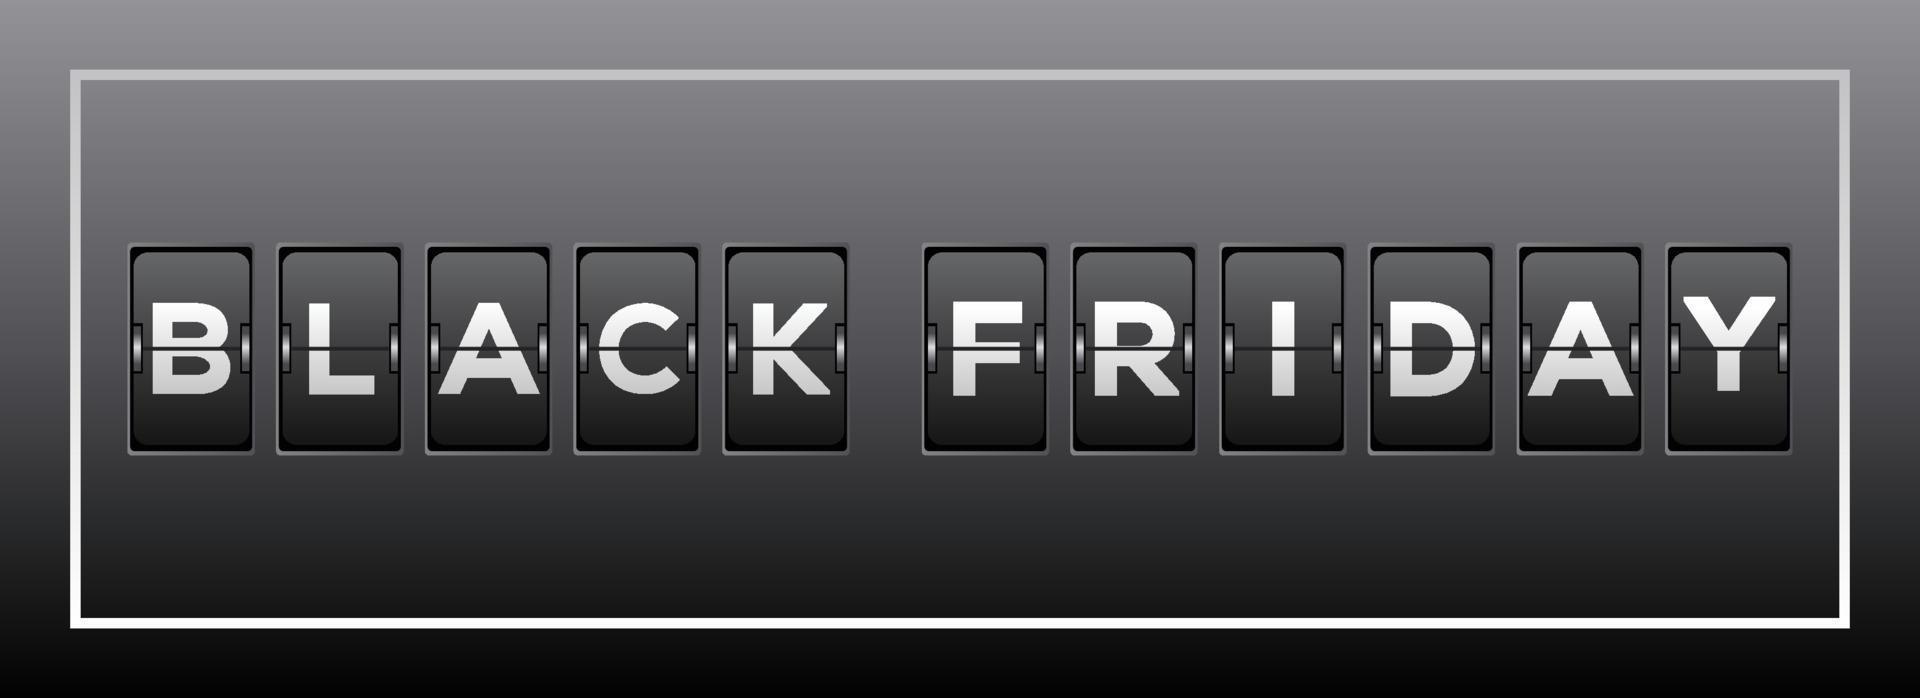 Black Friday Sale. Analog Flip Clock Design vector